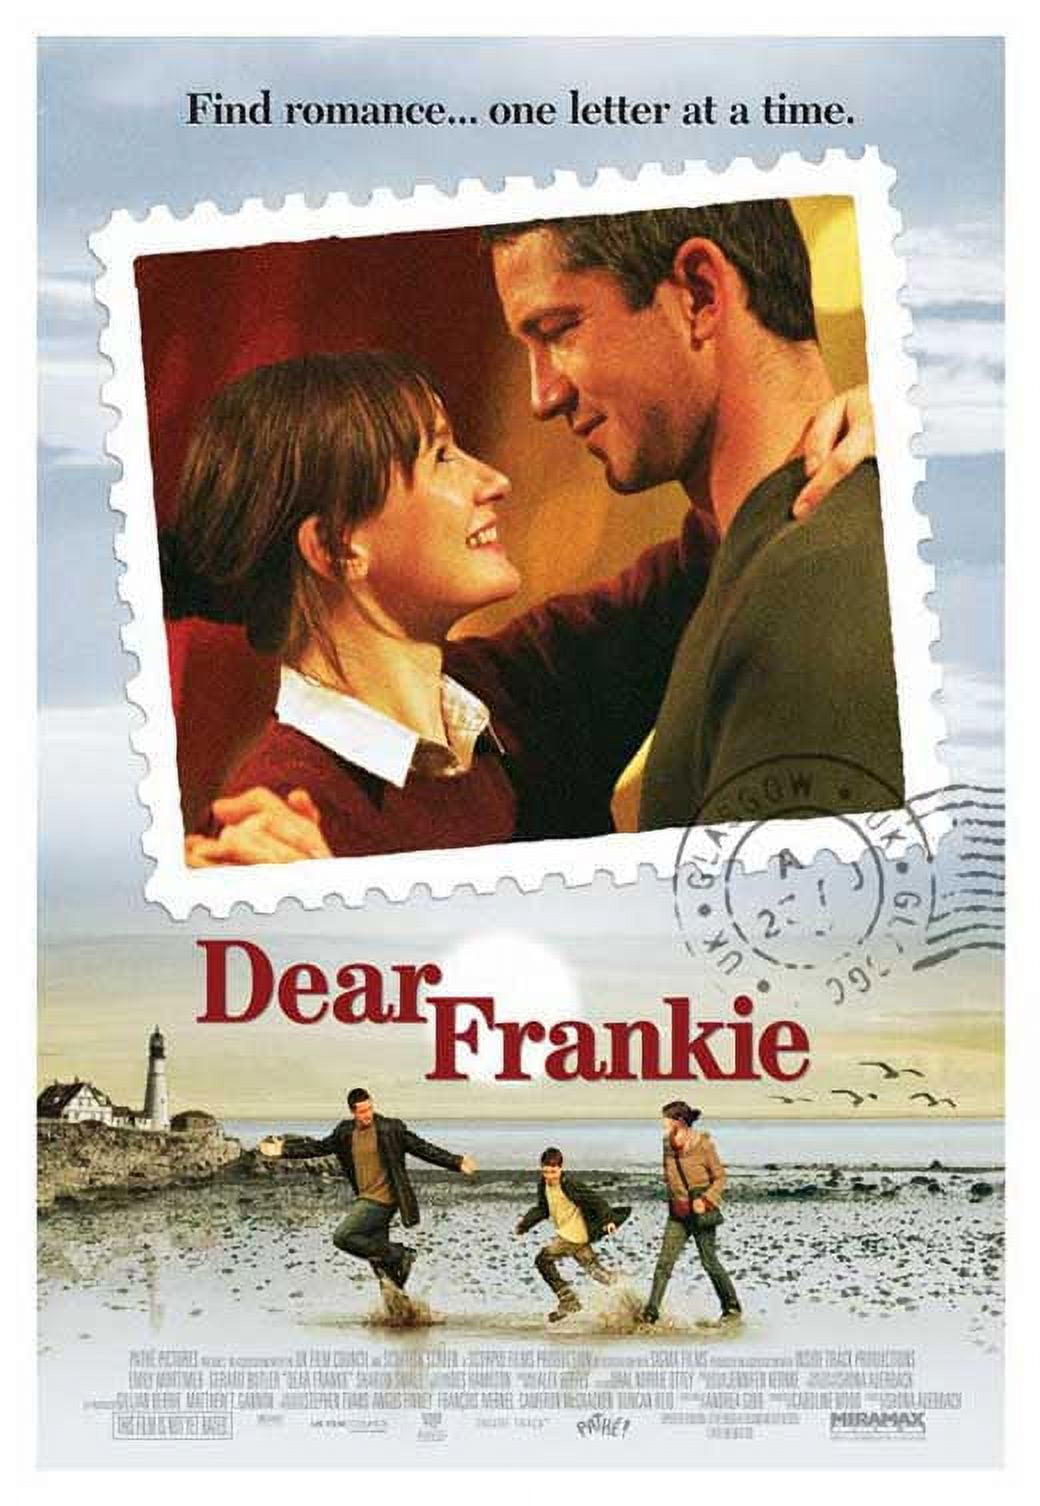 Dear Frankie - movie POSTER (Style B) (11 x 17) (2005) 